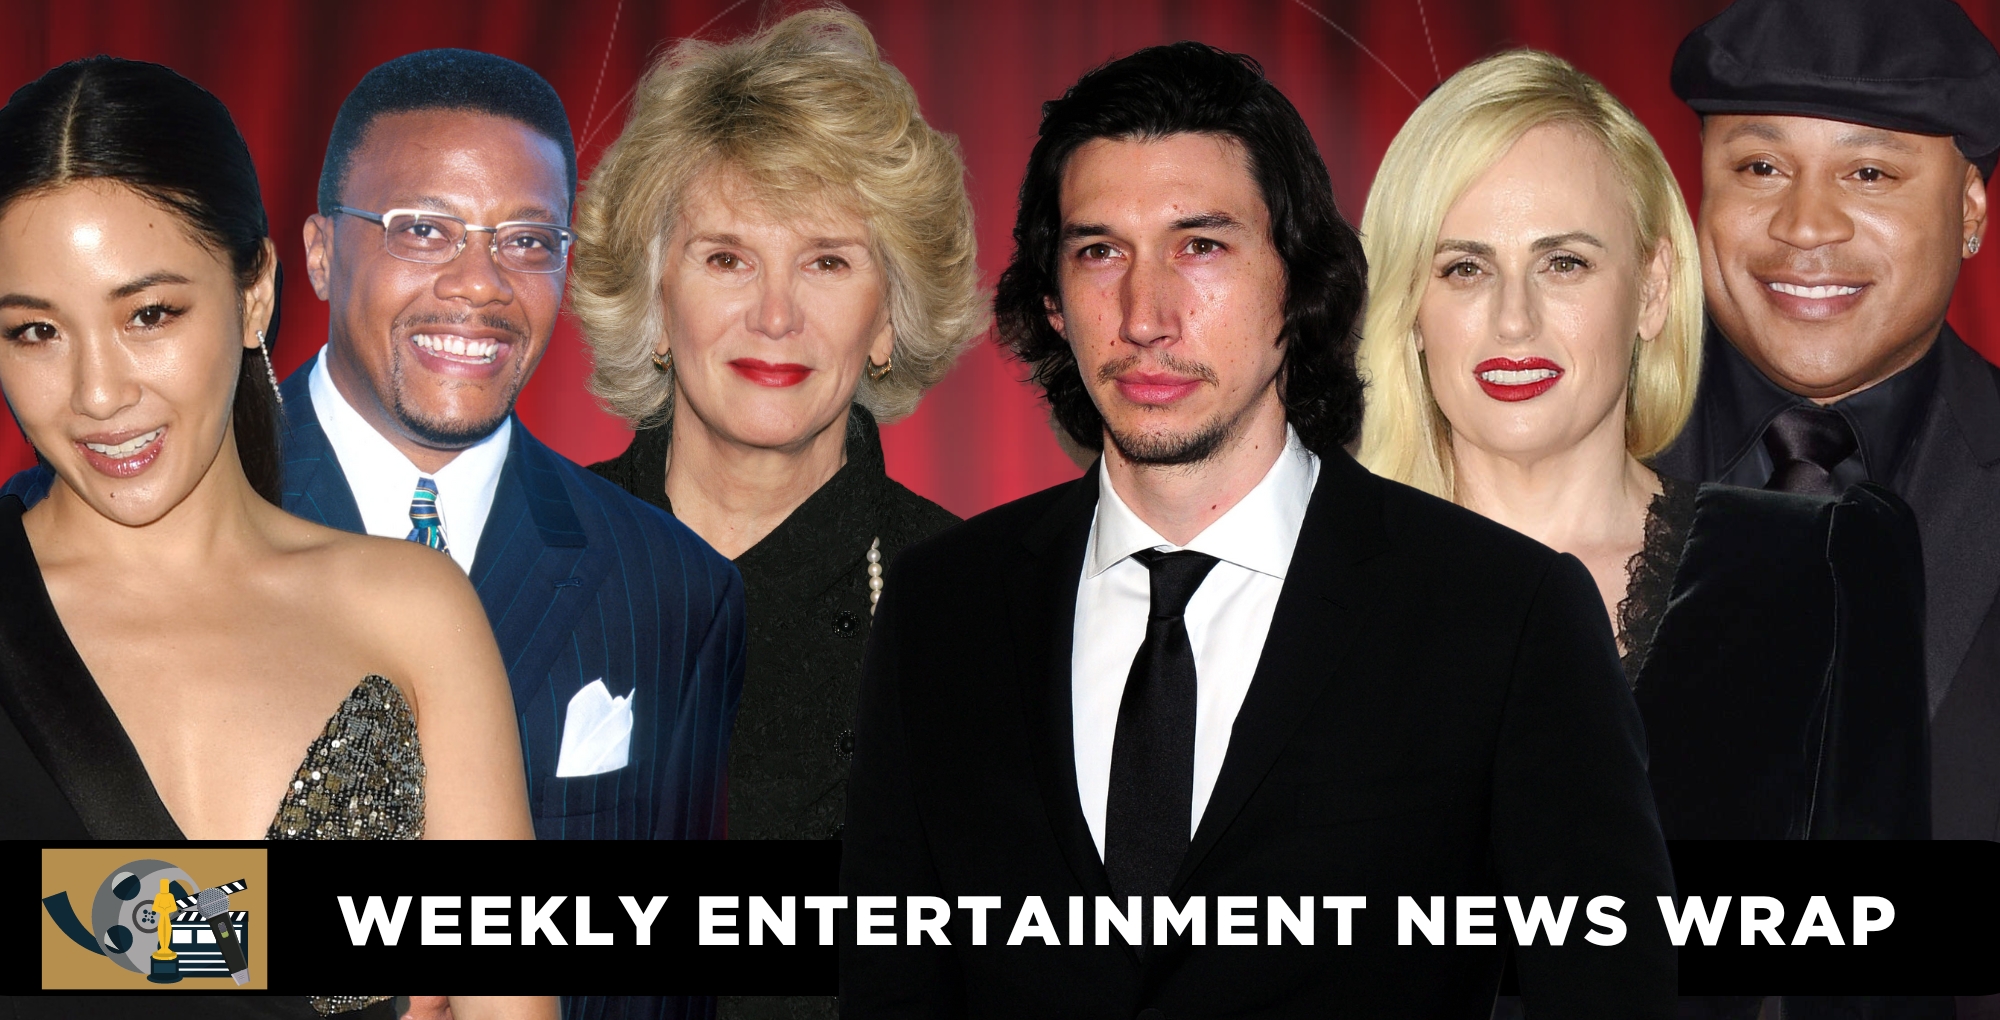 star studded entertainment news wrap for February 25